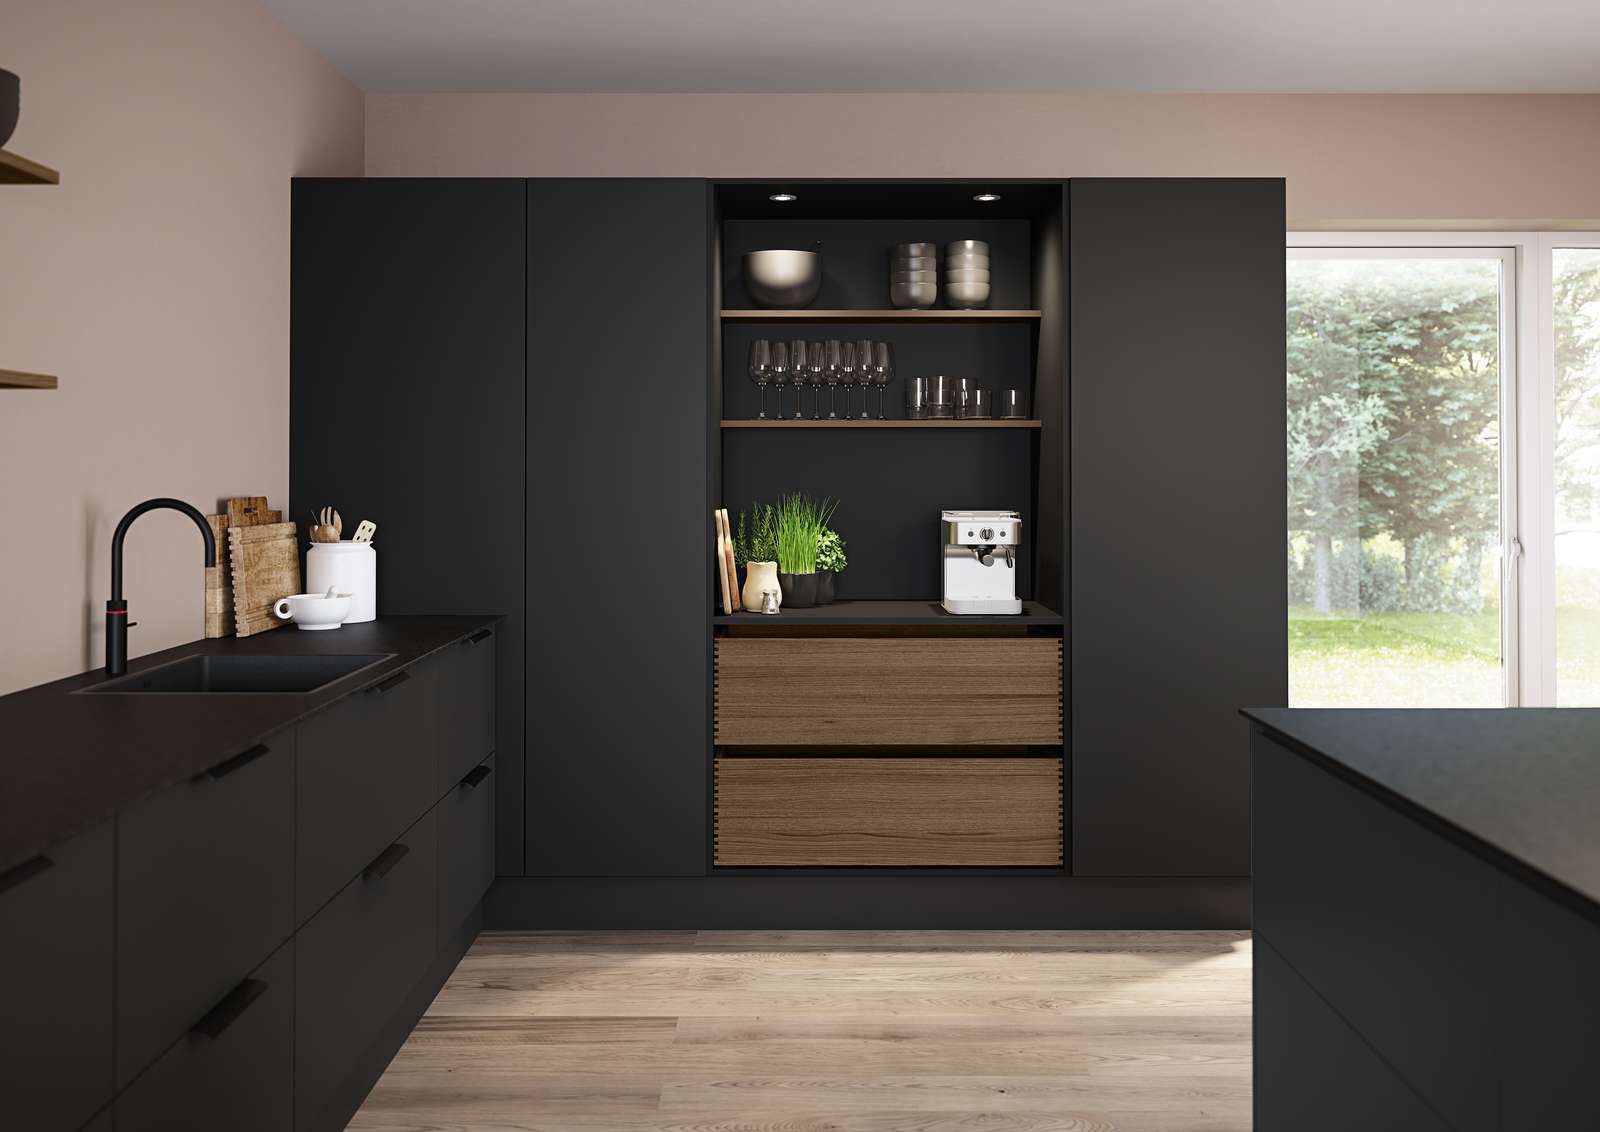 Bathroom cabinet, Interior design, Cabinetry, Countertop, Tap, Building, Plant, Wood, Lighting, Sink